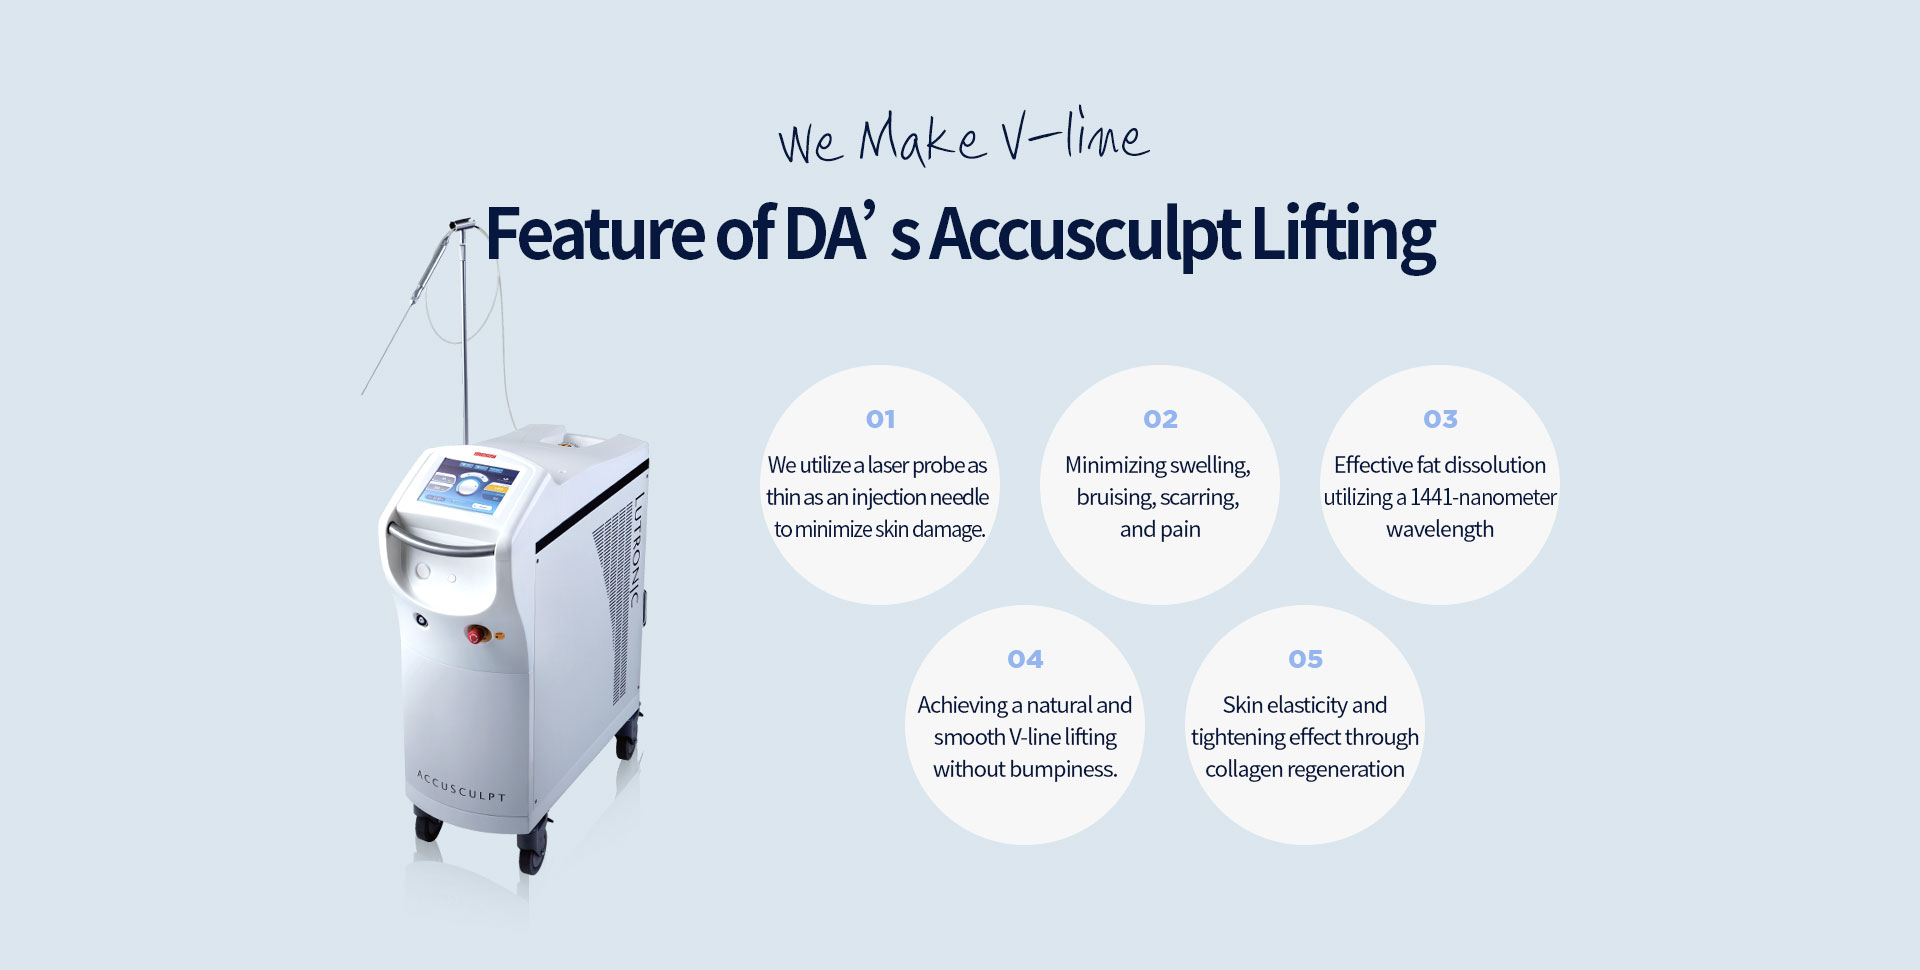 Feature of DA’s Accusculpt Lifting